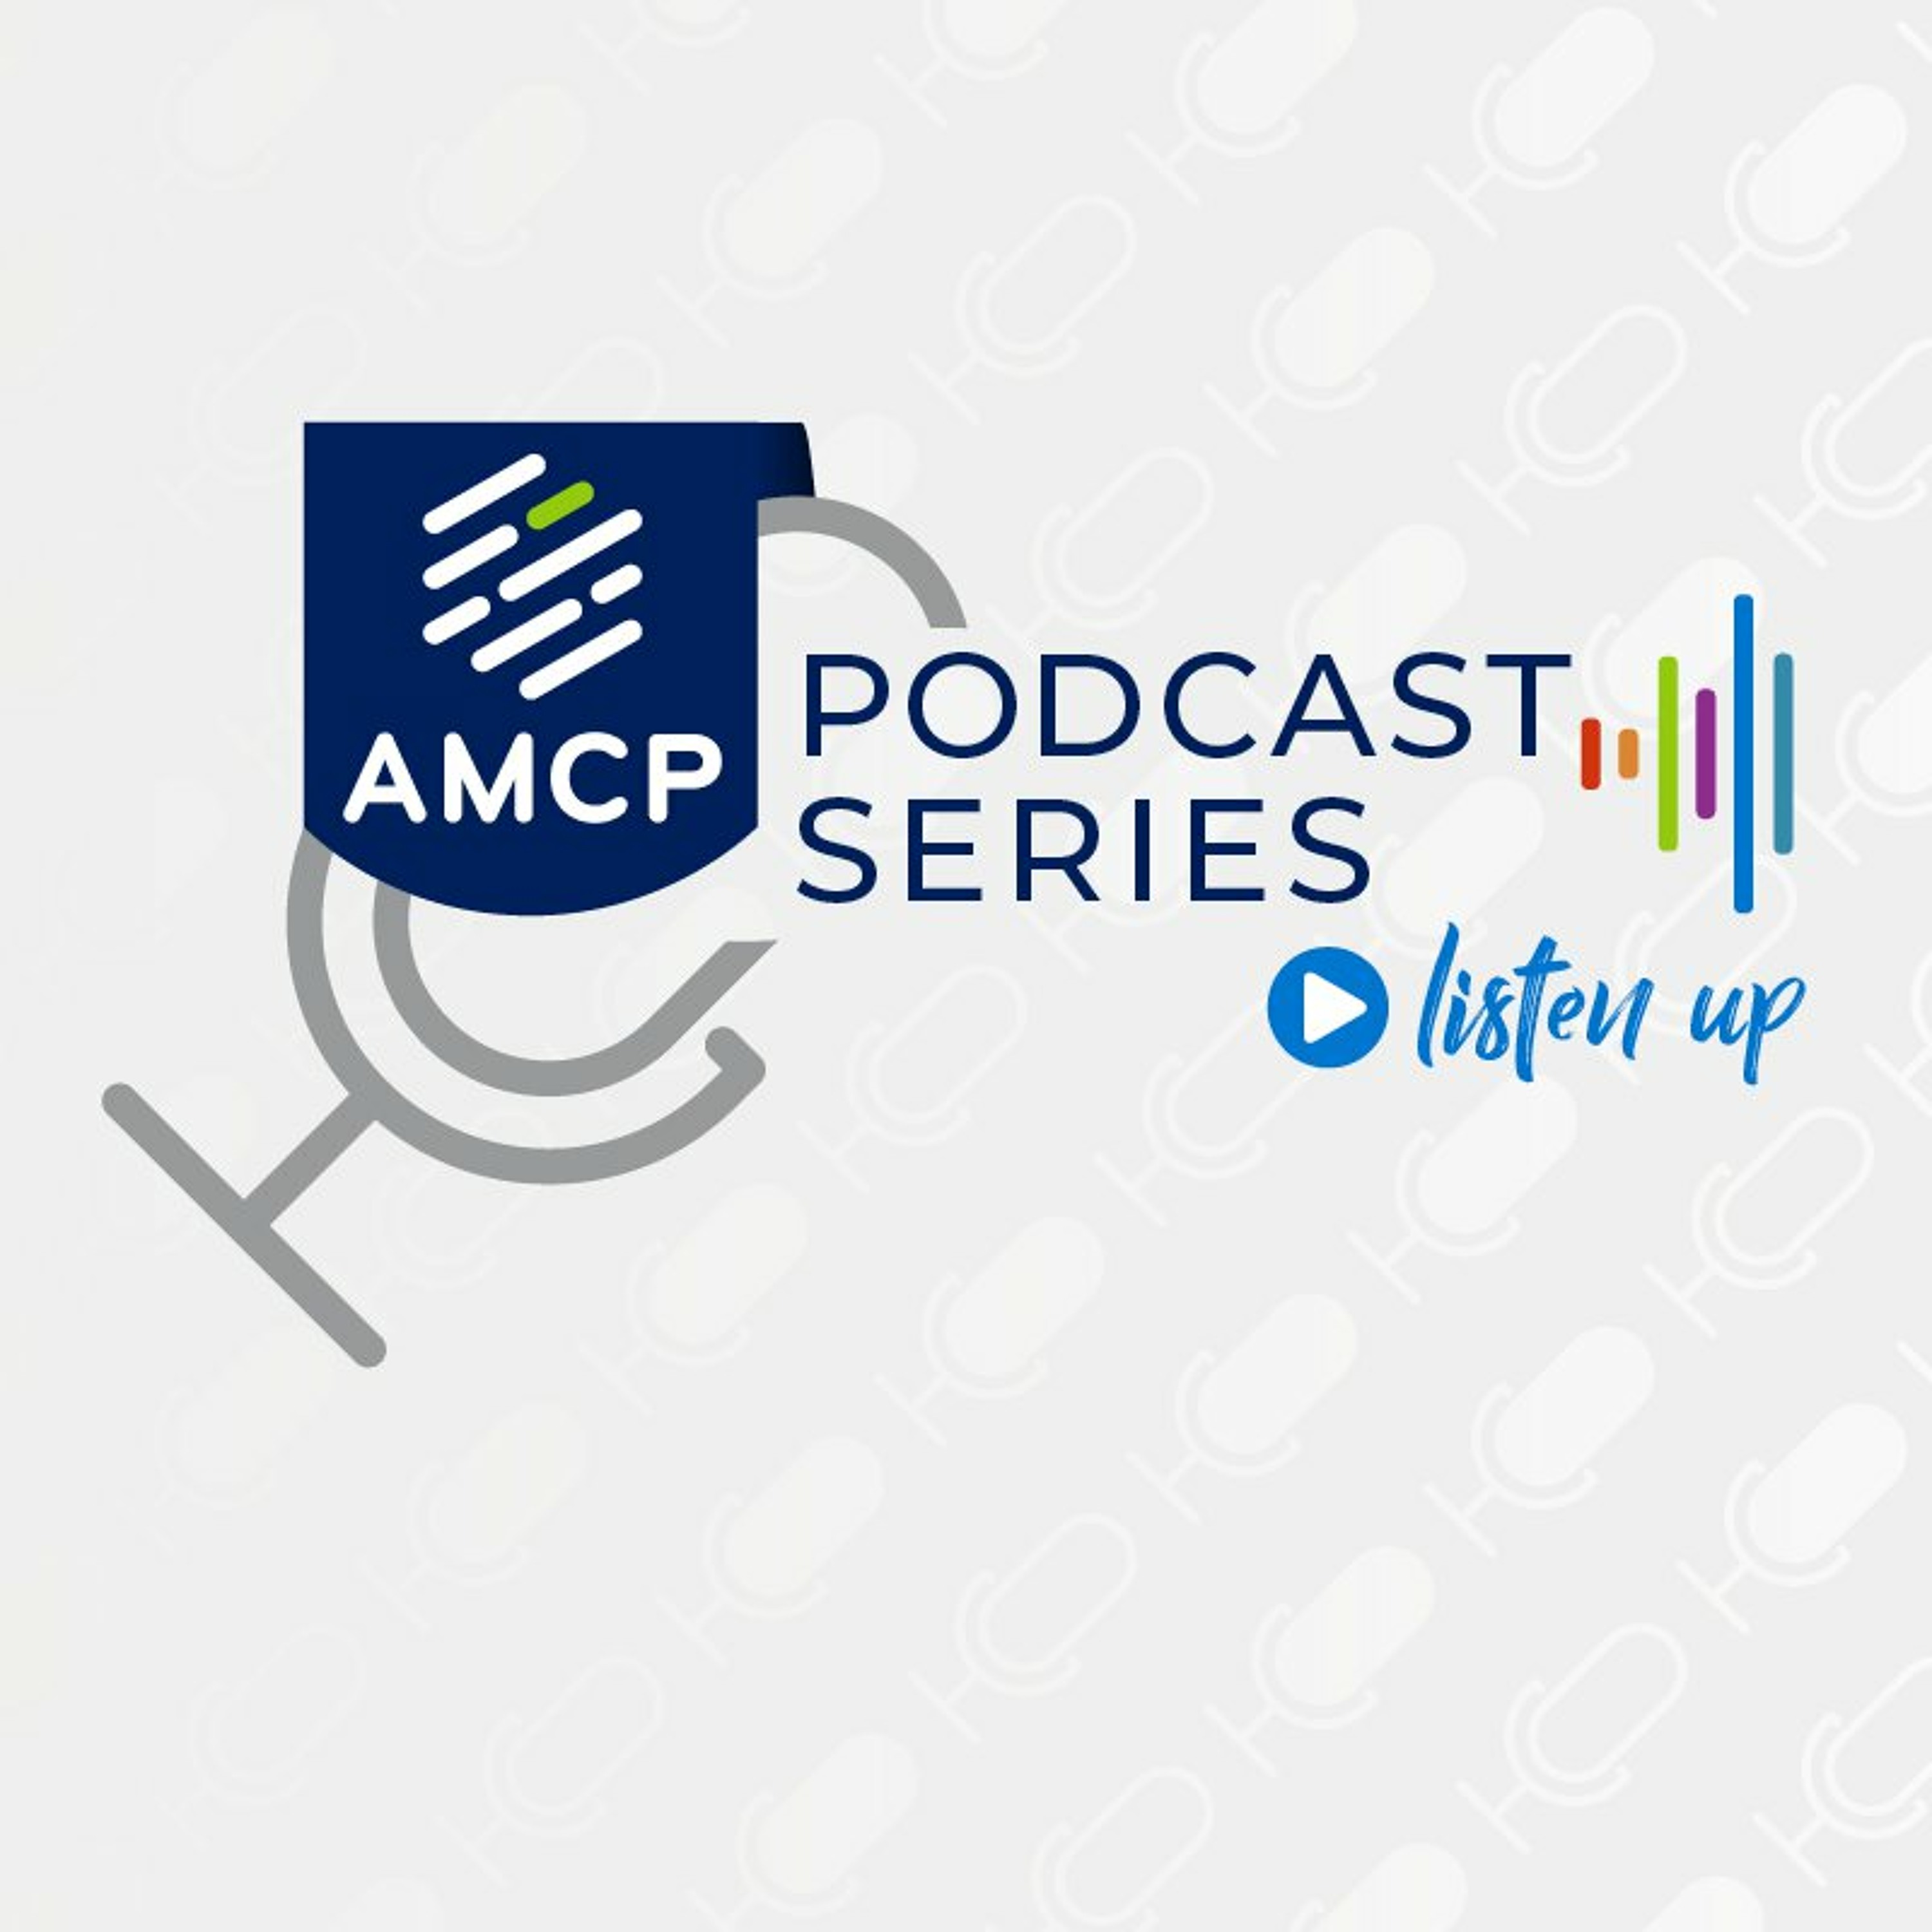 AMCP Podcast Series - Listen Up: Geni Tunstall, Director, Regulatory Affairs at AMCP